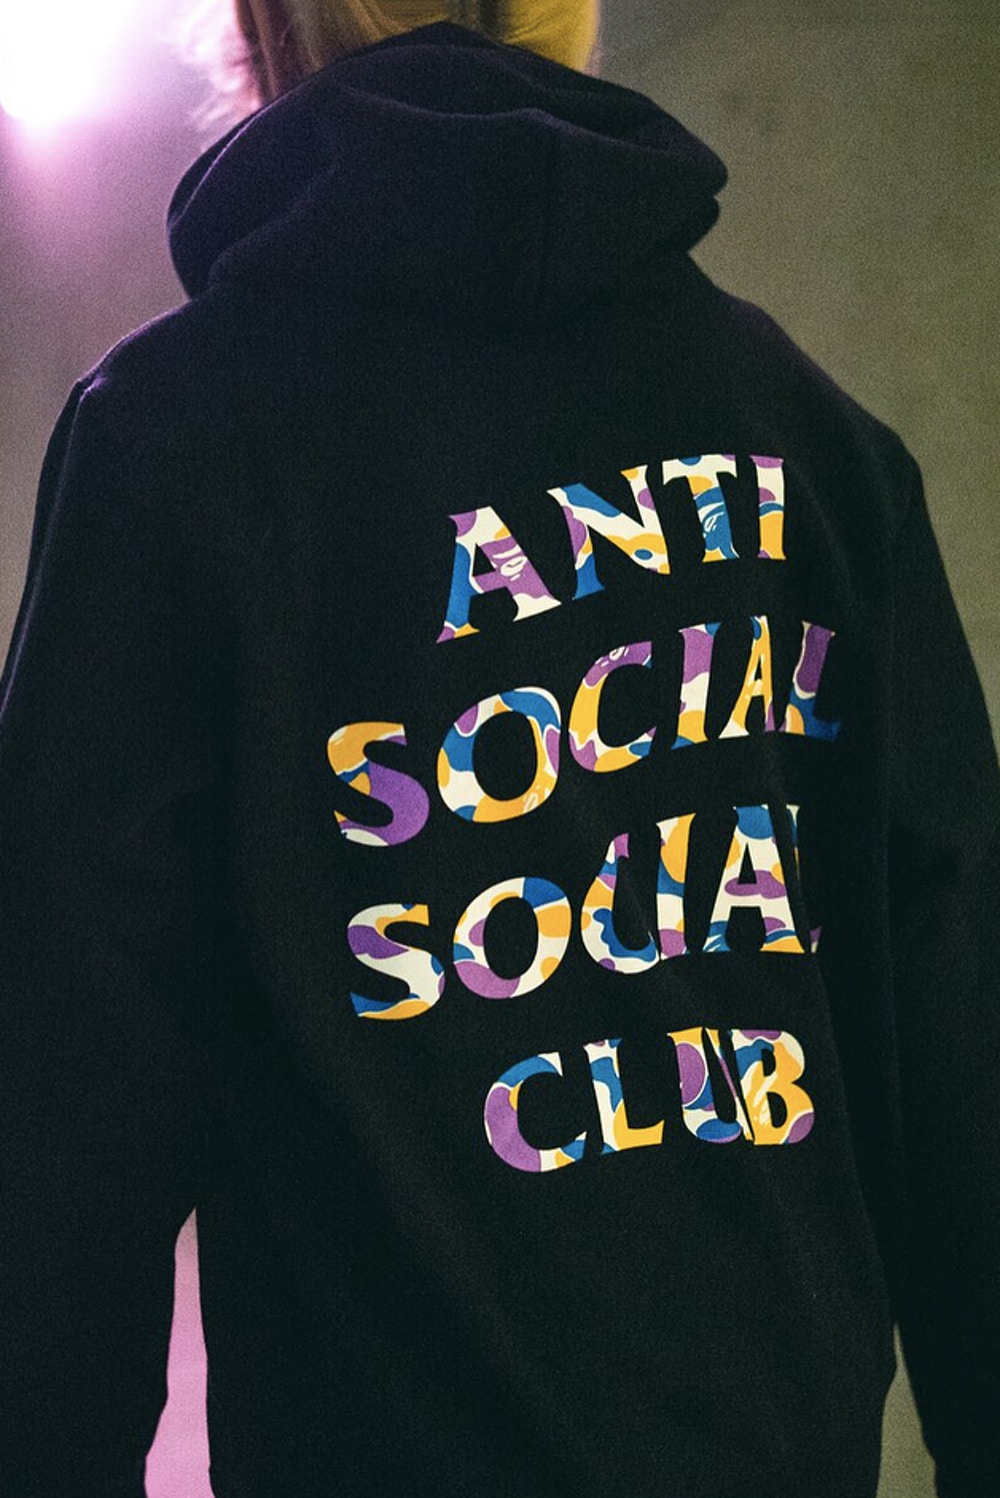 Anti Social Club x BAPE Collaboration Revealed